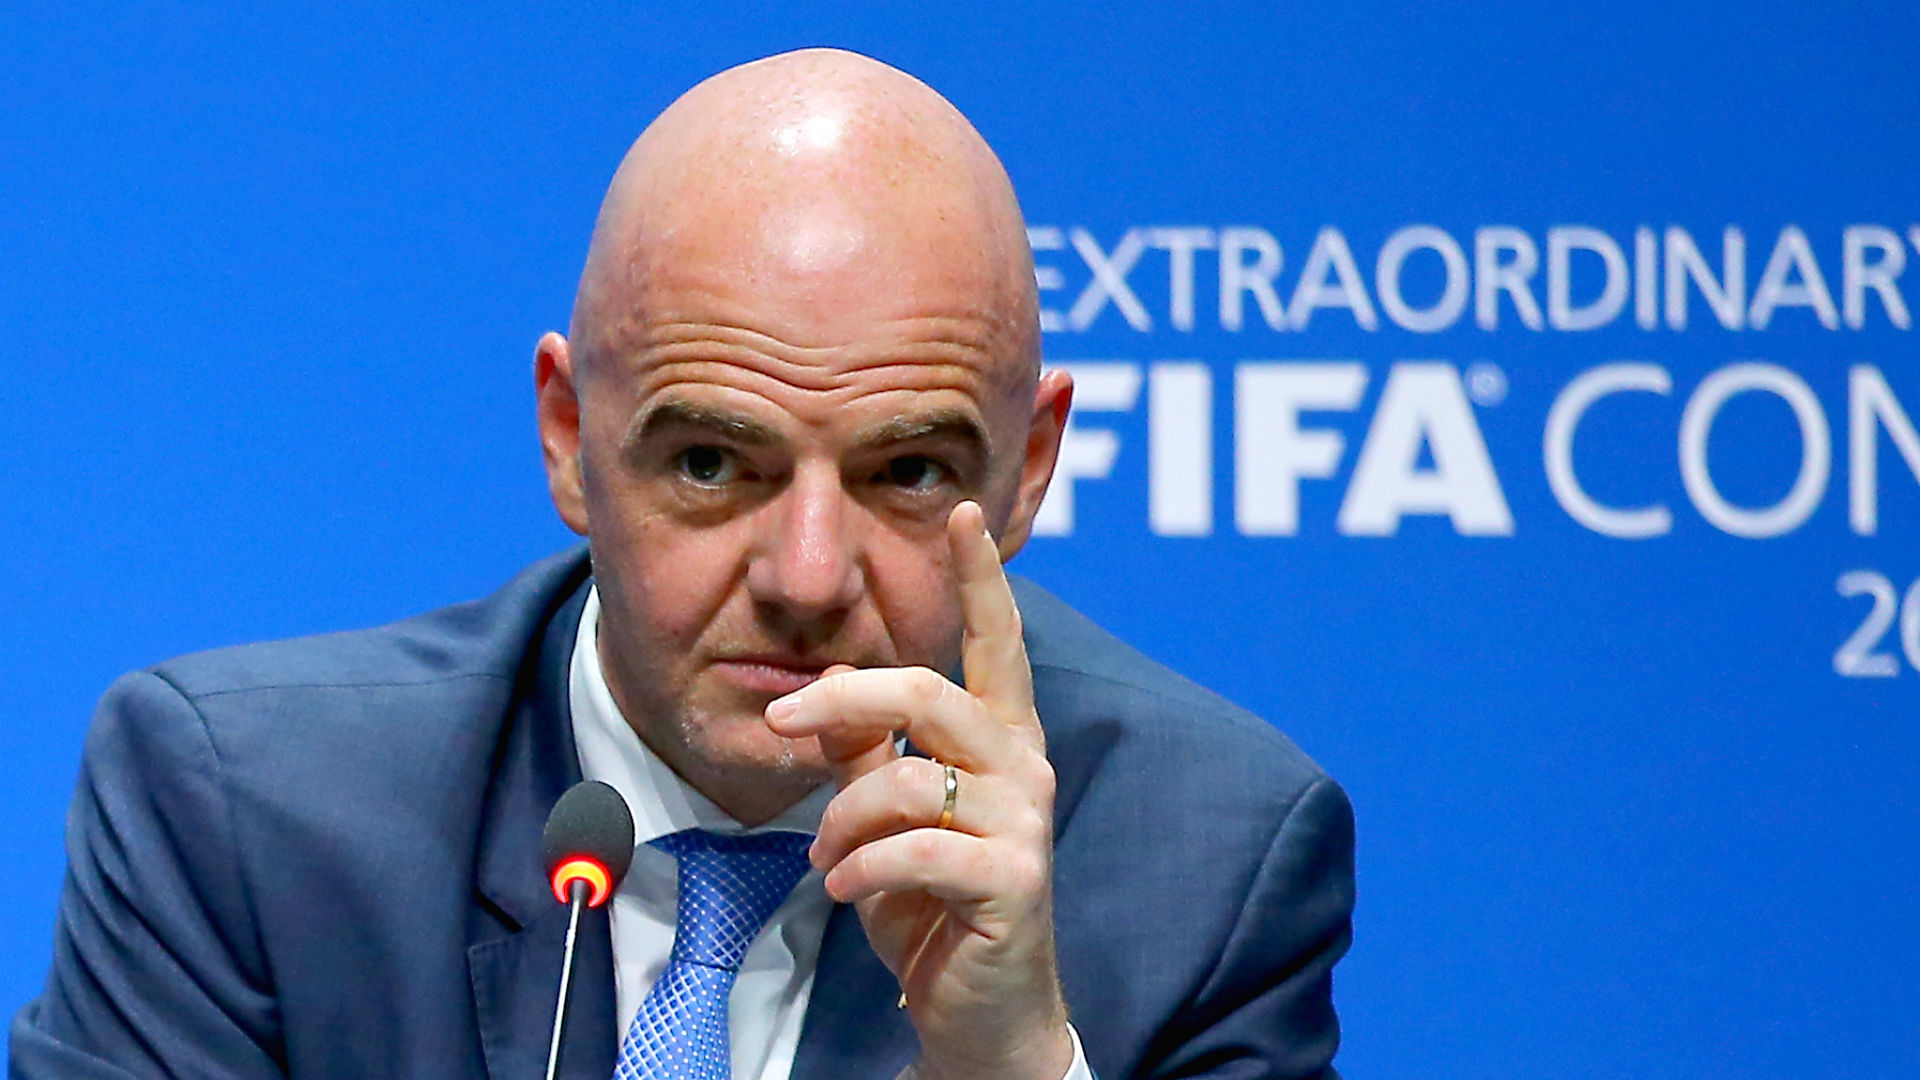 Appeal of Women's Soccer Growing, FIFA Chief Says in Jordan